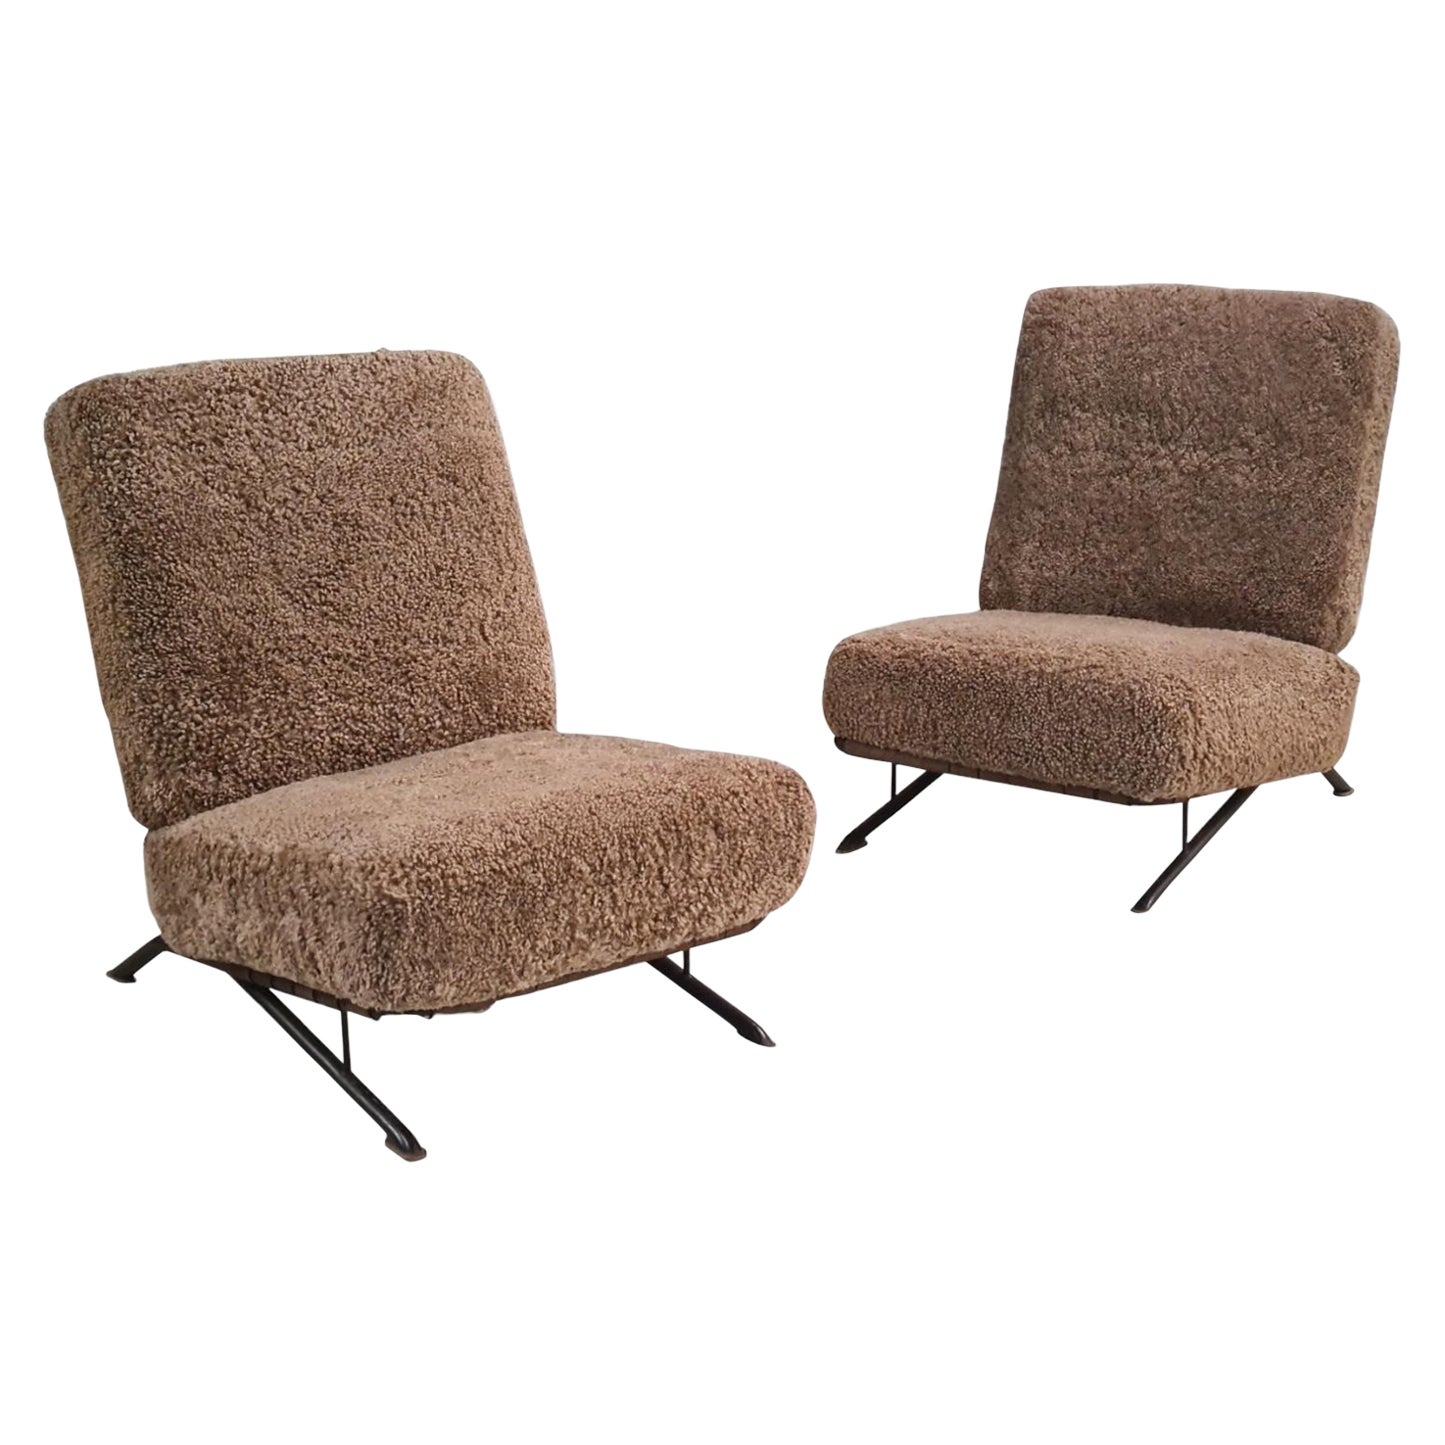 Pair of Commissioned Ilmari Tapiovaara Lounge Chairs, Merivaara 1950s For Sale